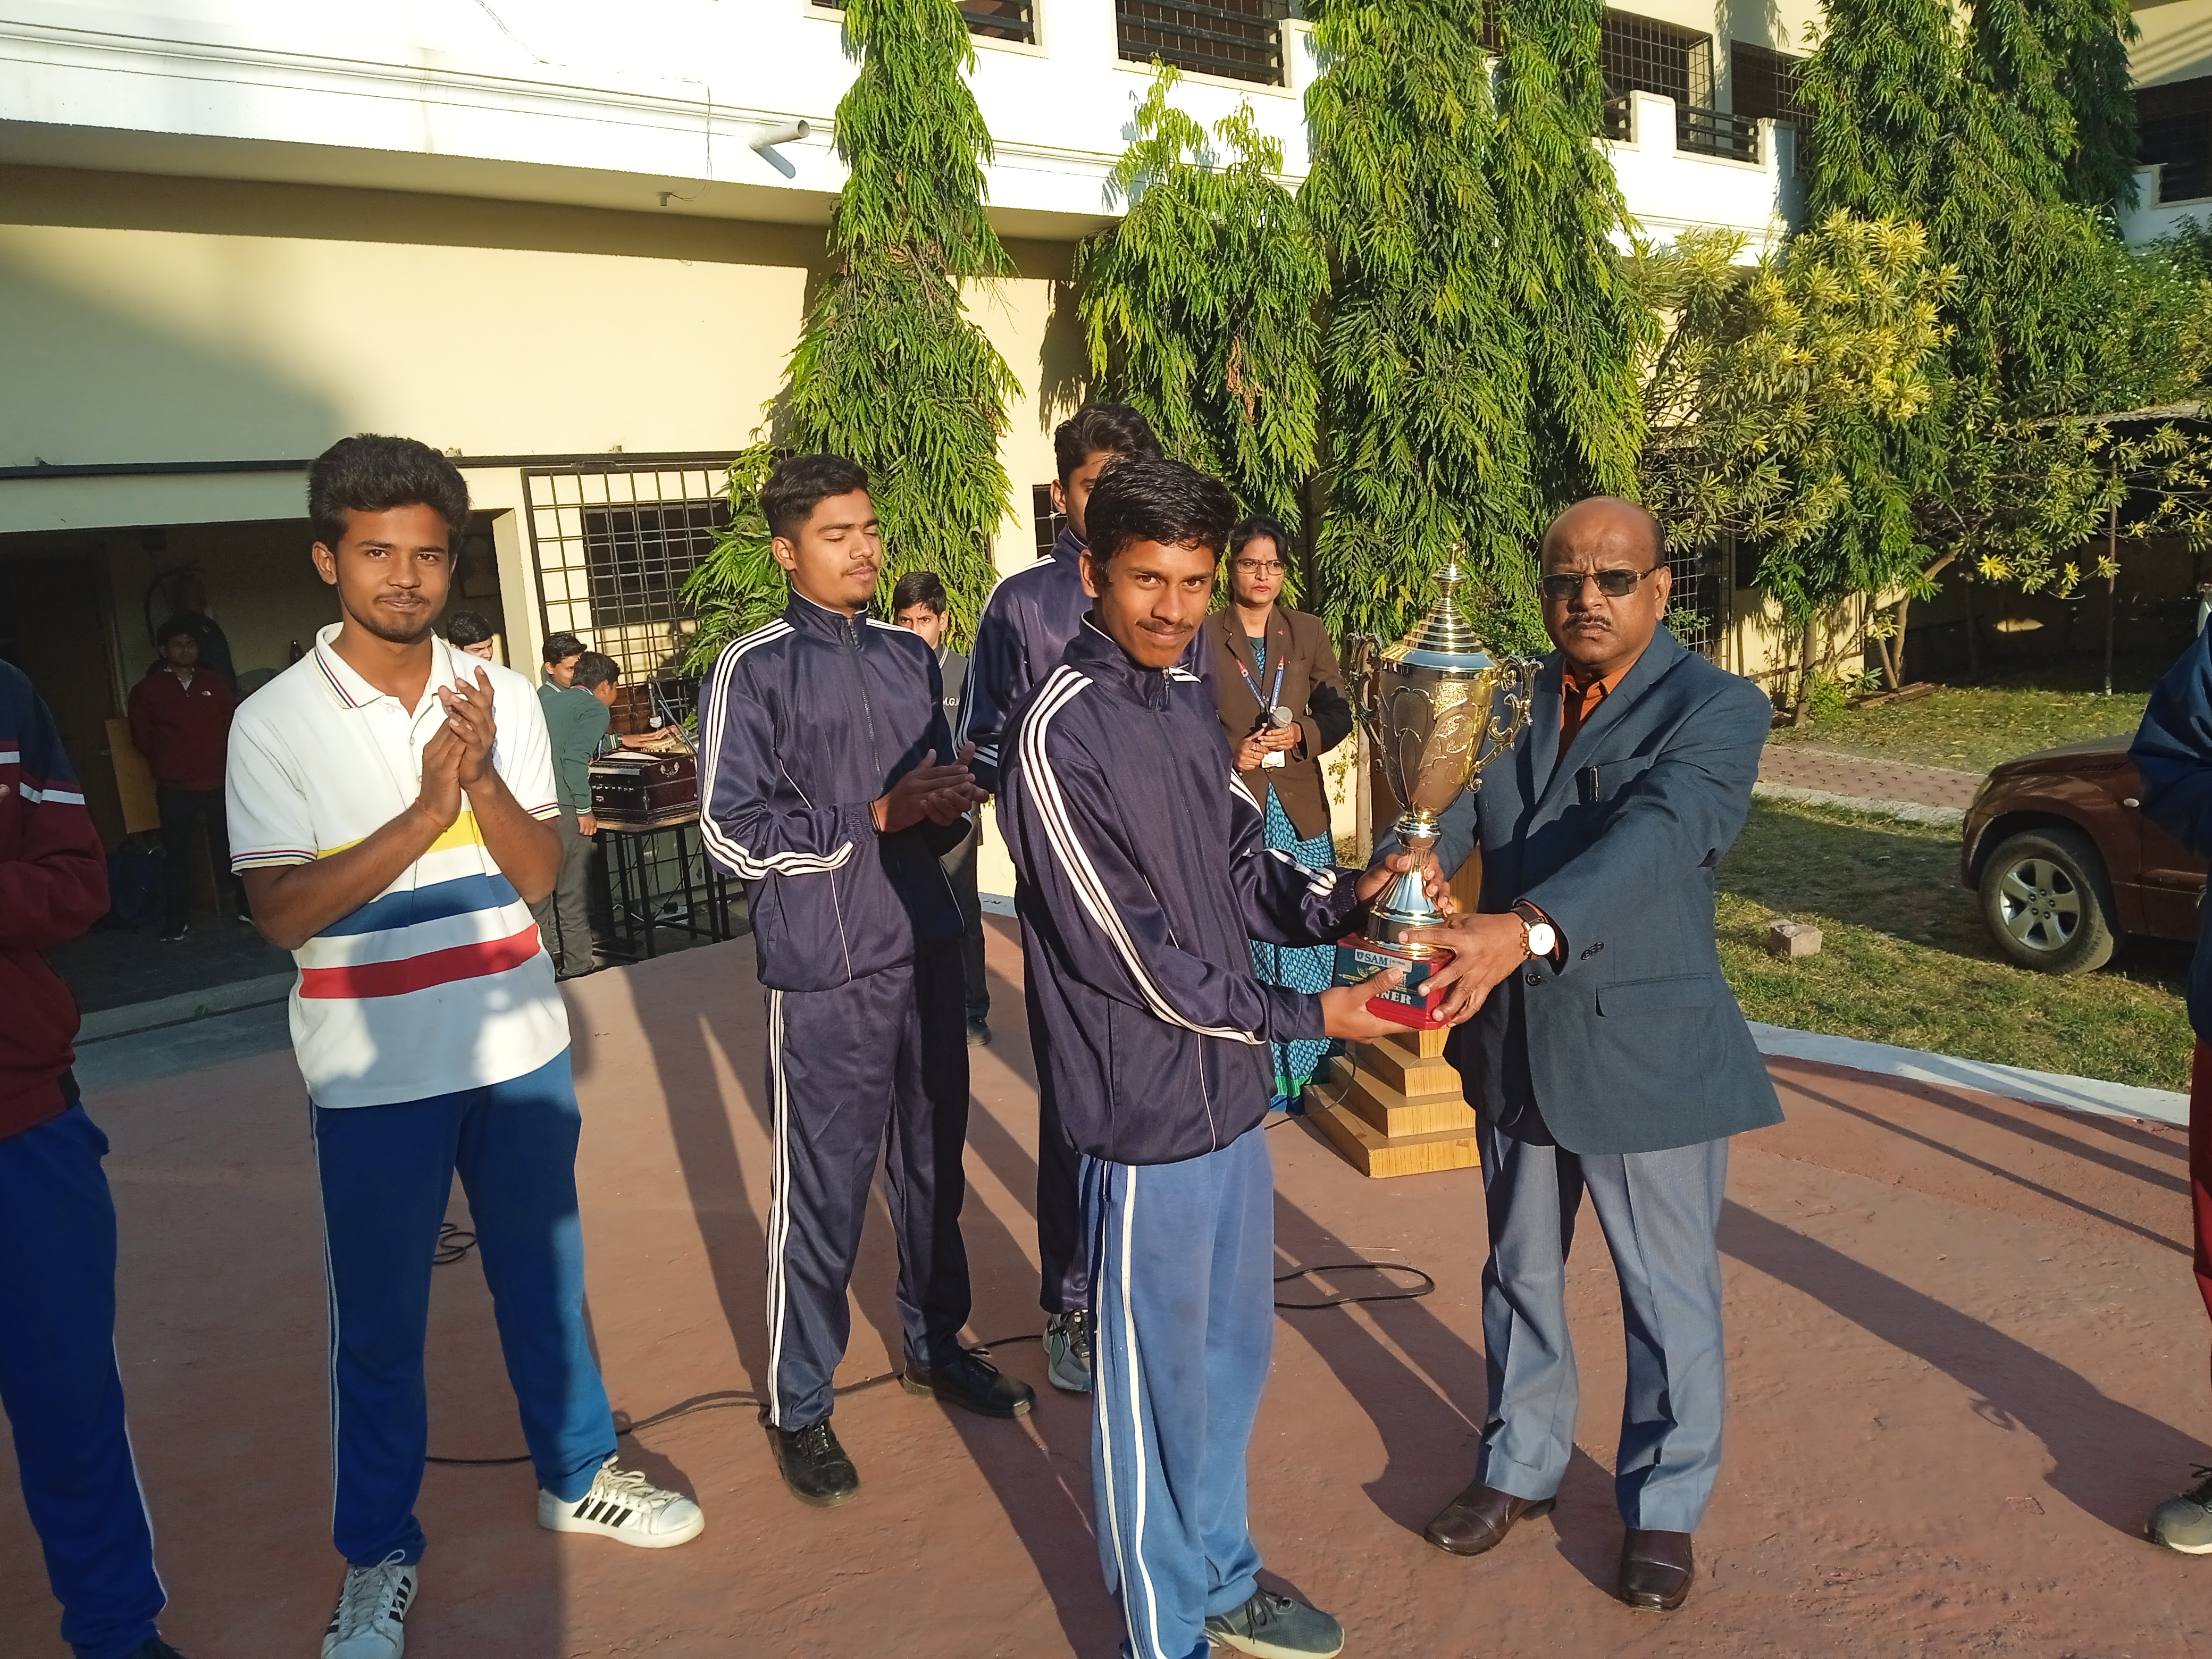 Winners- Inter School Cricket Tournament Vidisha 2022